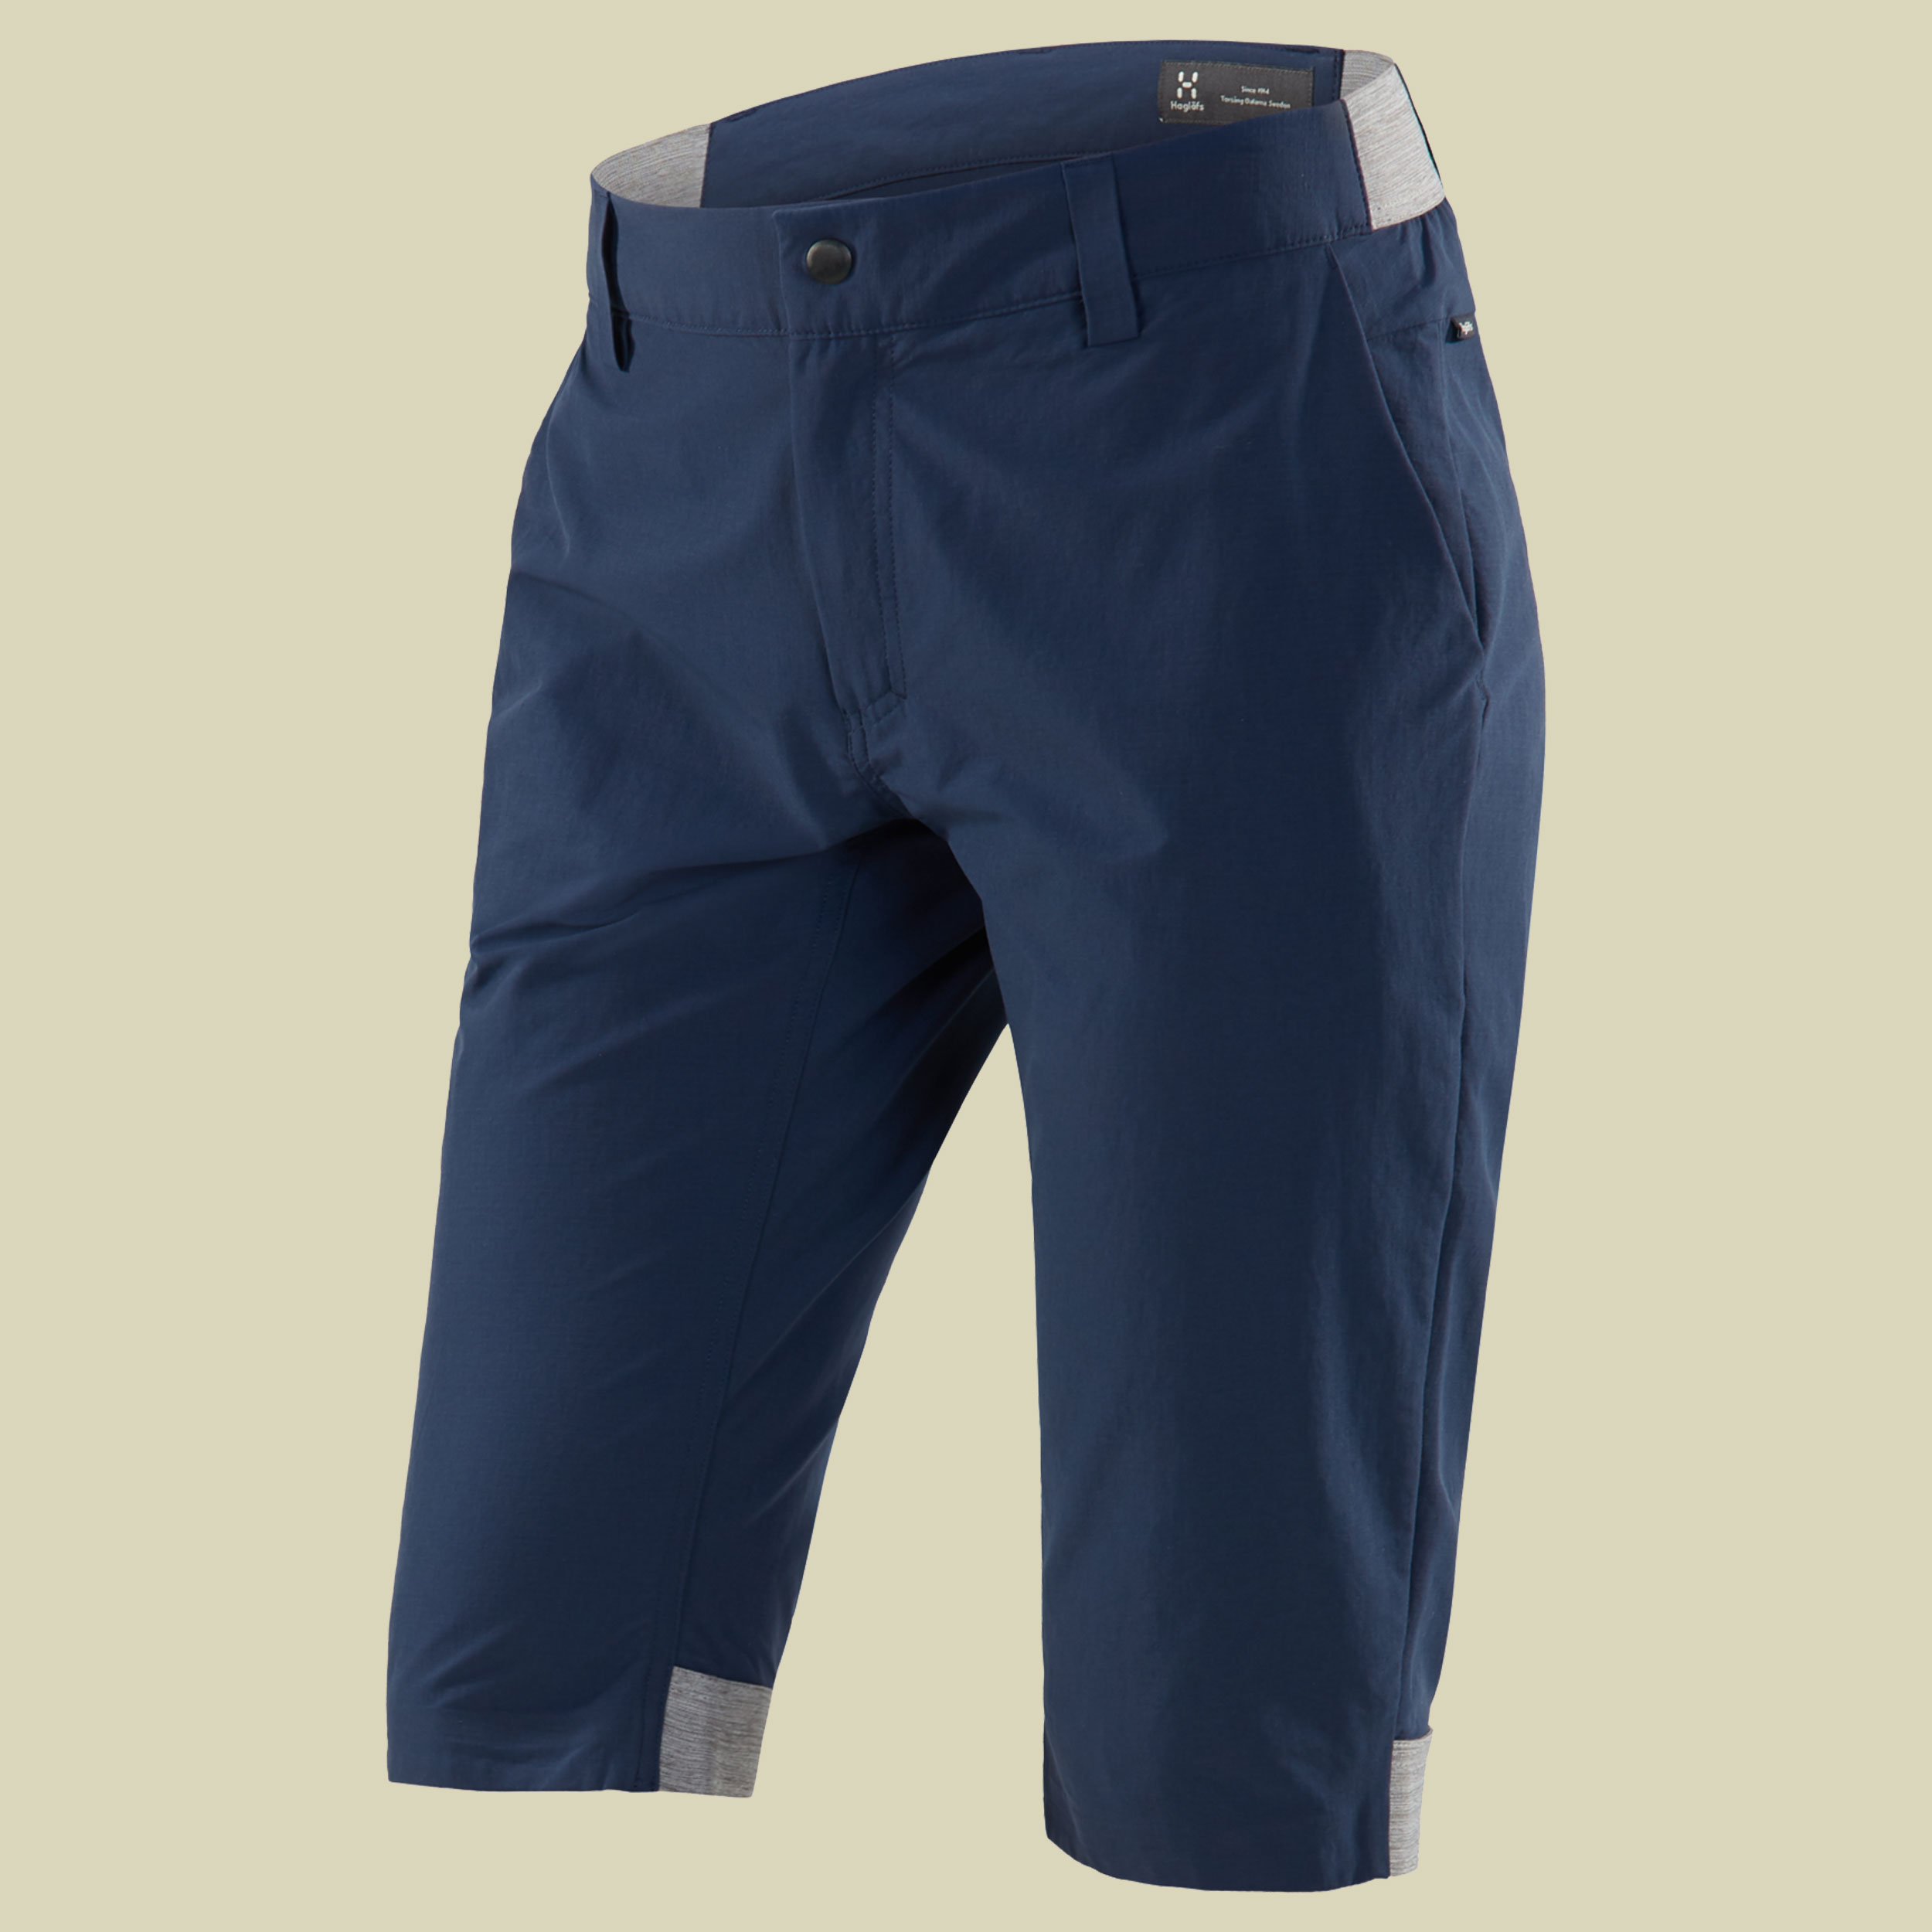 Amfibious Long Shorts Women Größe 44 Farbe tarn blue